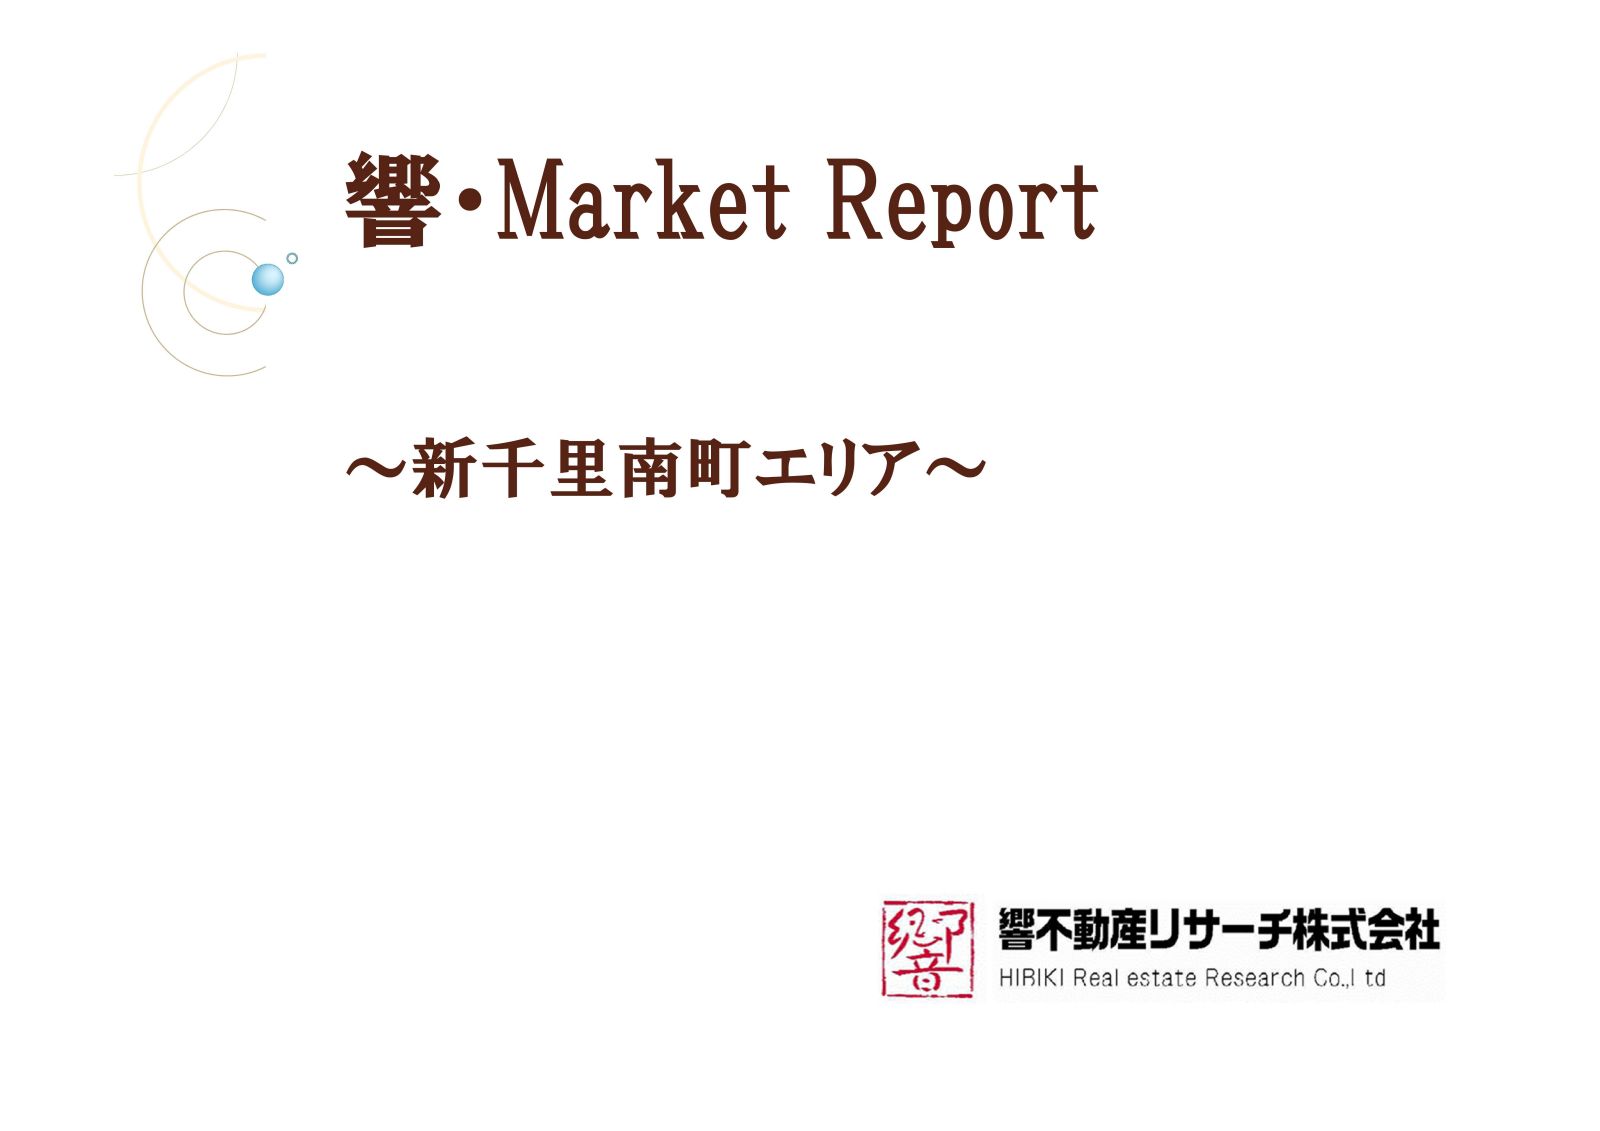 Microsoft PowerPoint - 新千里南町レポート-001_1600